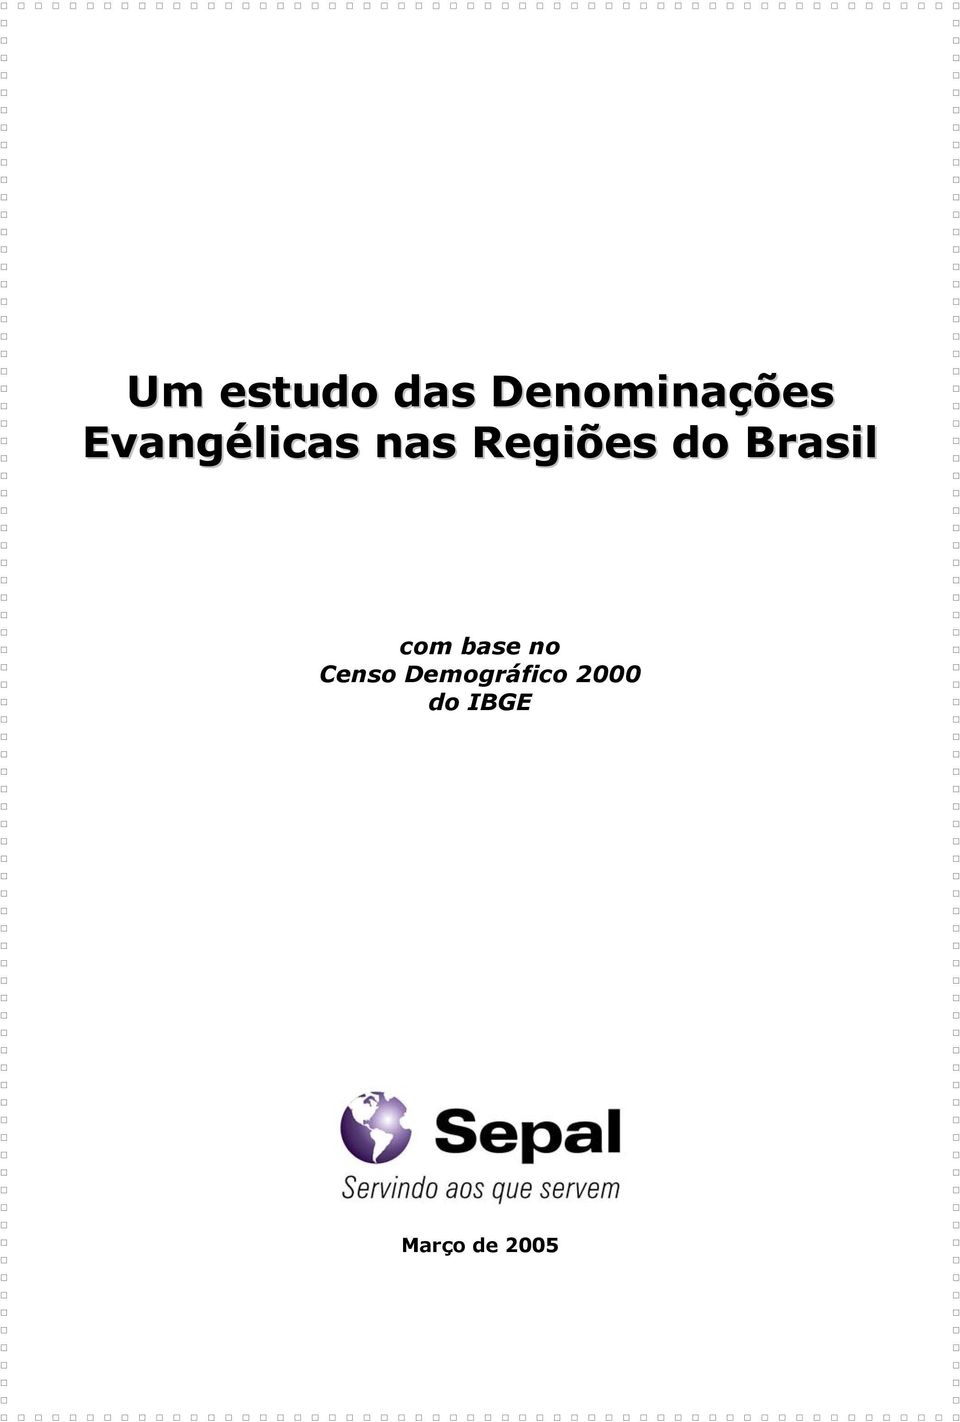 Brasil com base no Censo